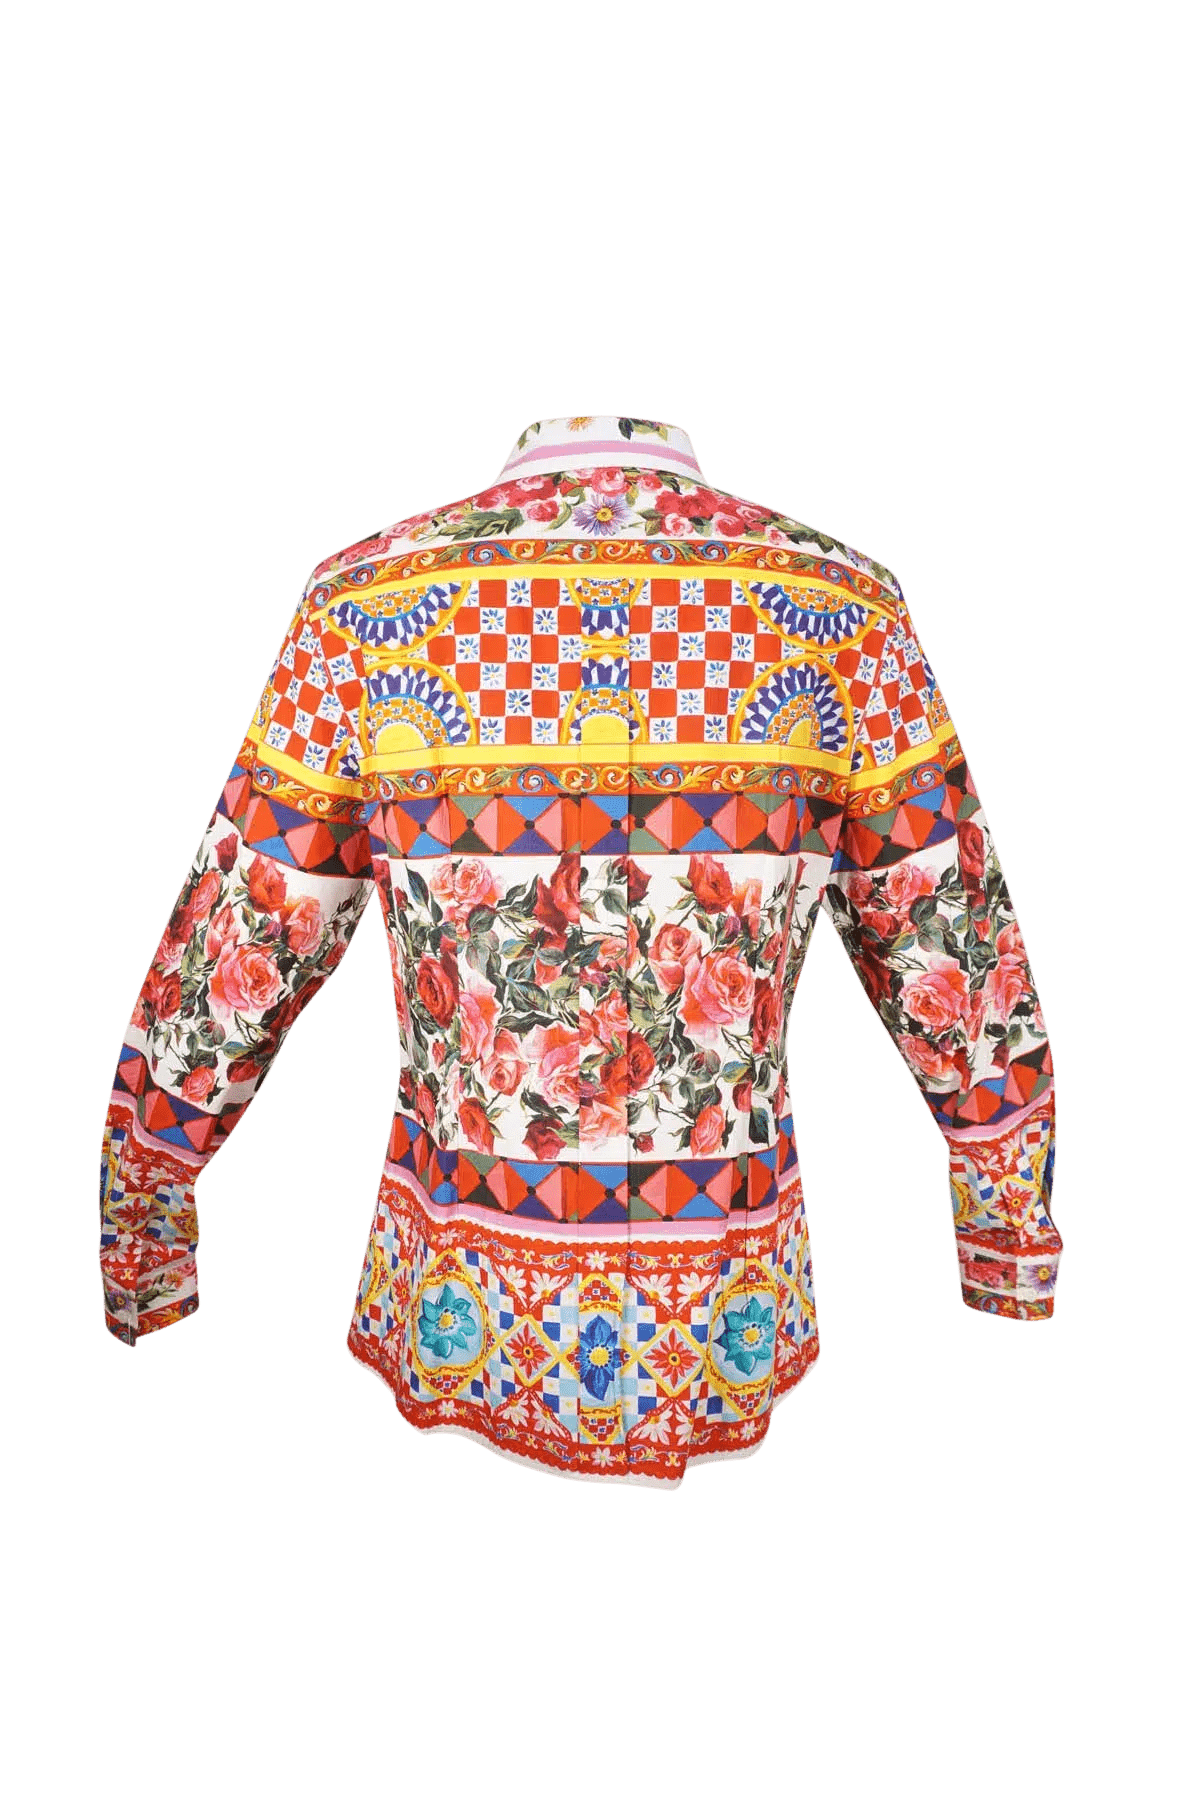 Dolce & Gabbana Multi-Color Italy Mixed Print Blouse Shirt